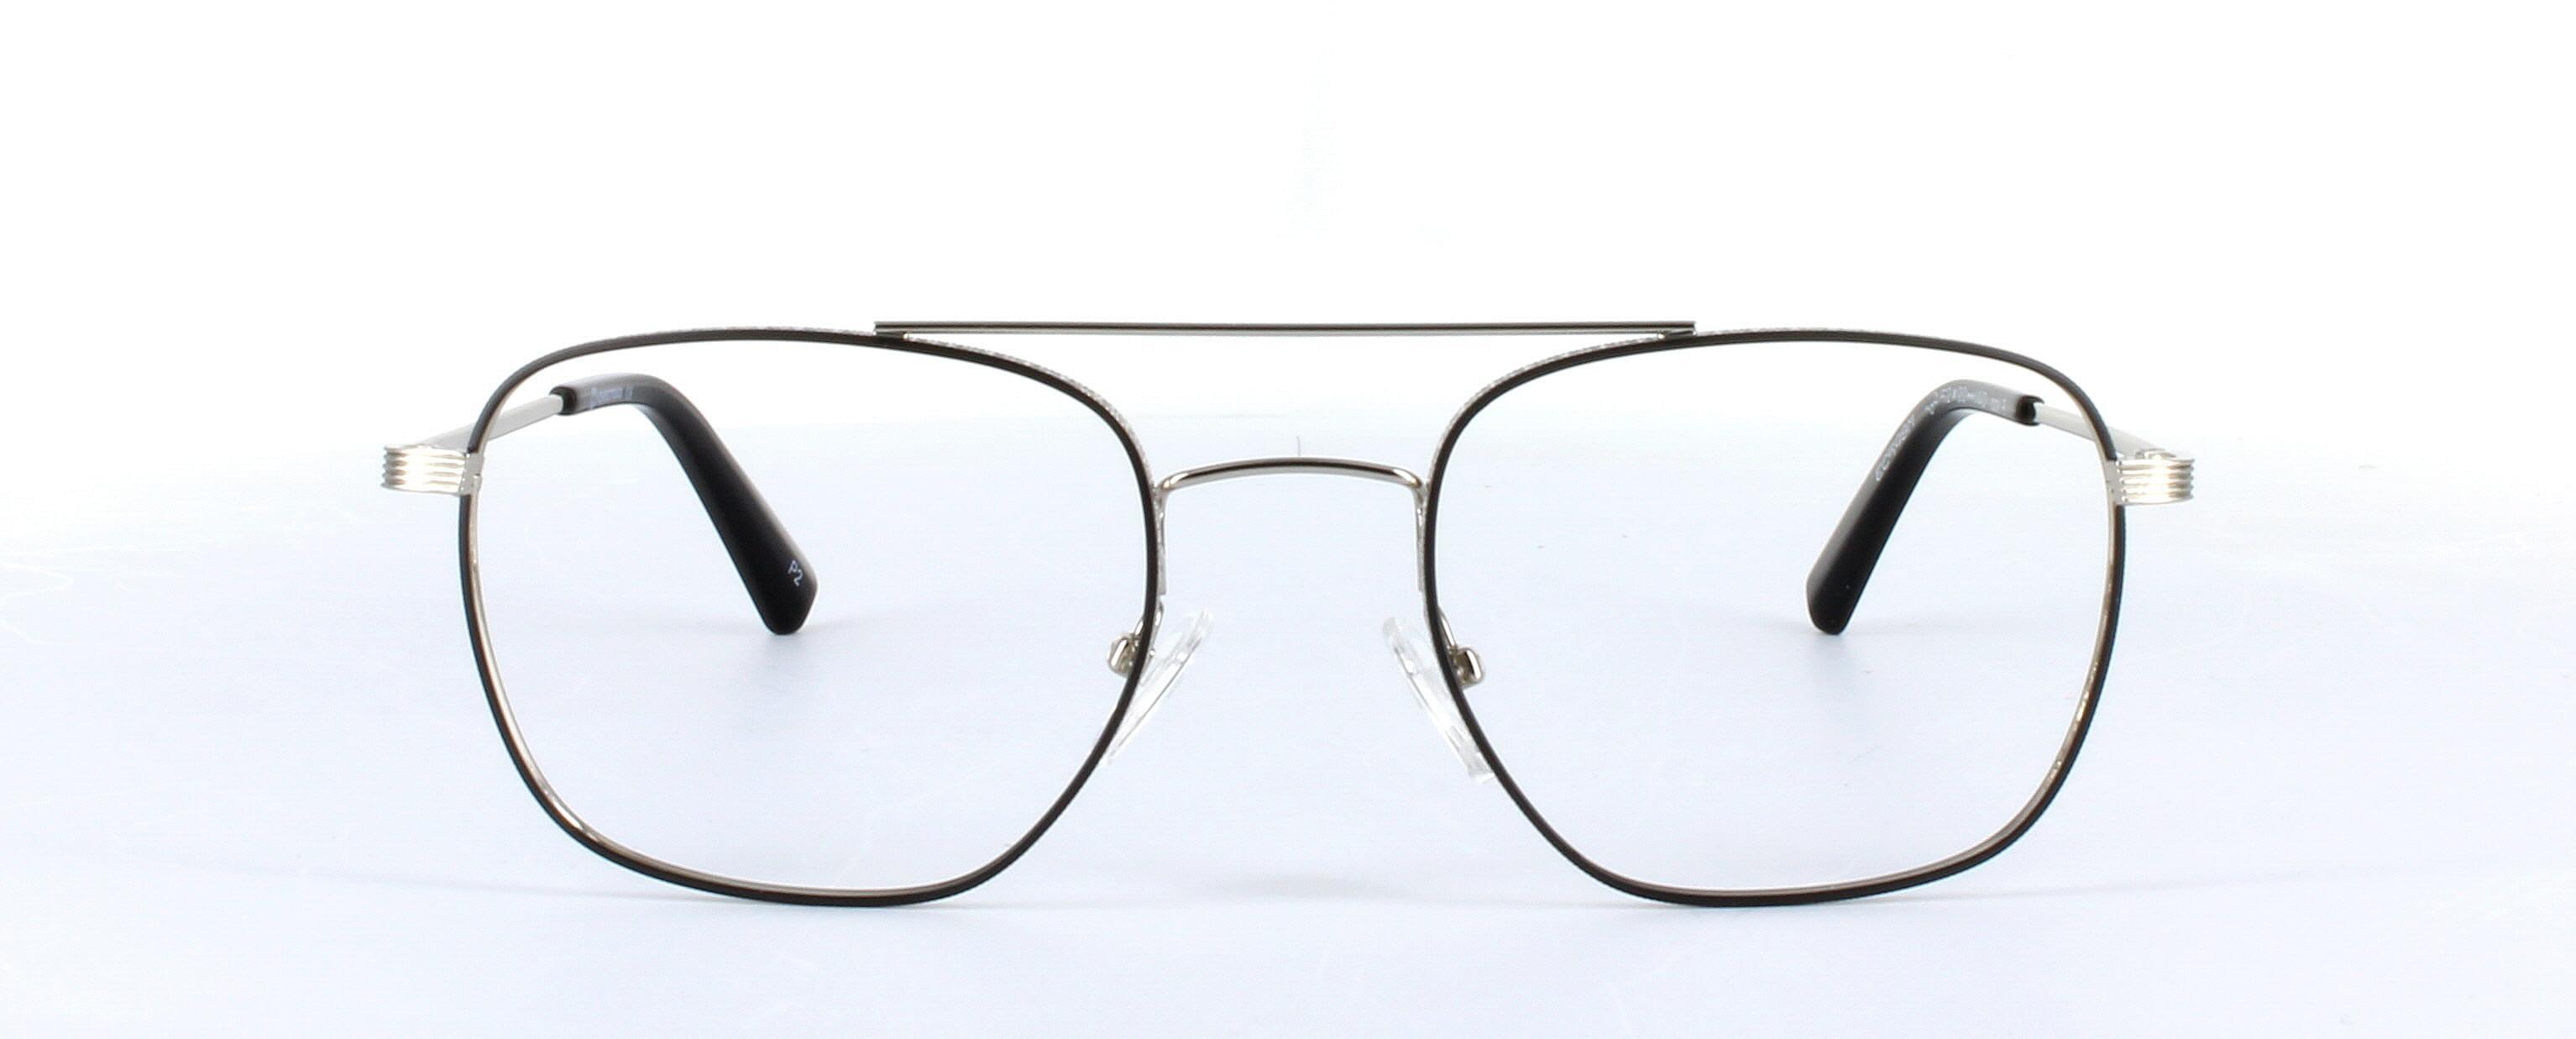 Eyecroxx 598-C3 Black and Silver Full Rim Aviator Metal Glasses - Image View 5